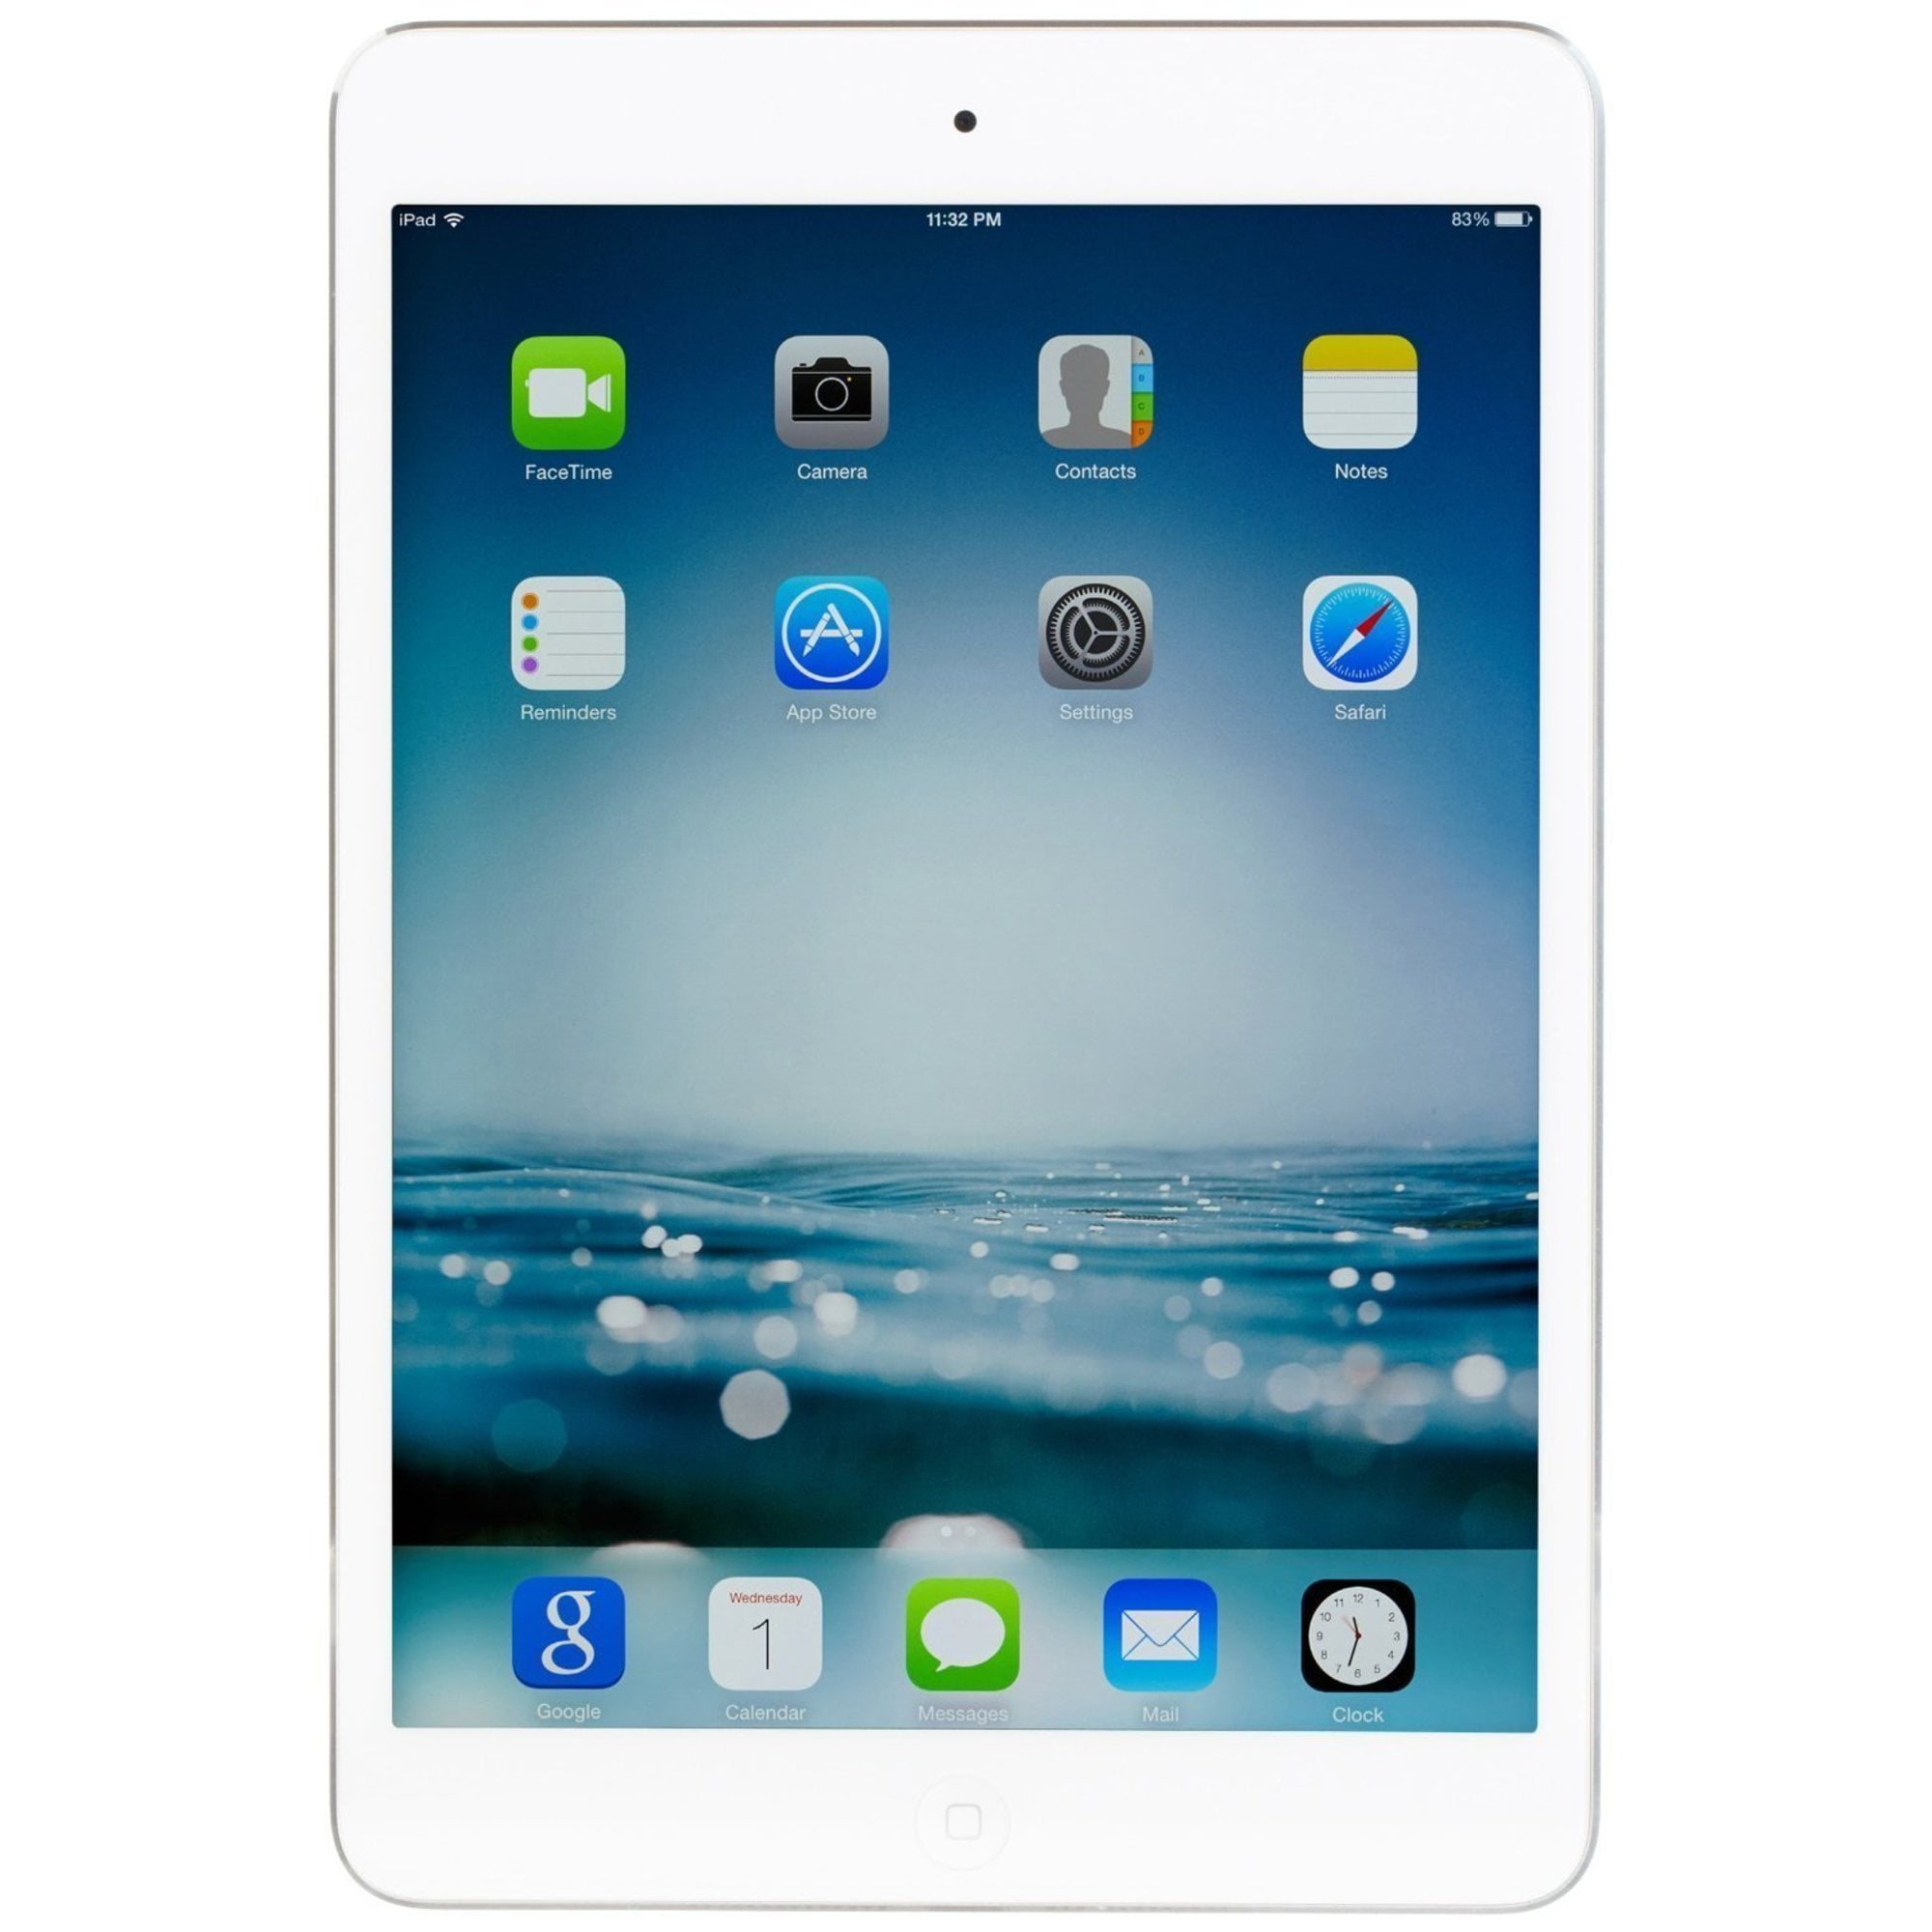 Apple iPad Mini 2 128GB with Retina Display Wi-Fi Tablet - Silver (Used)